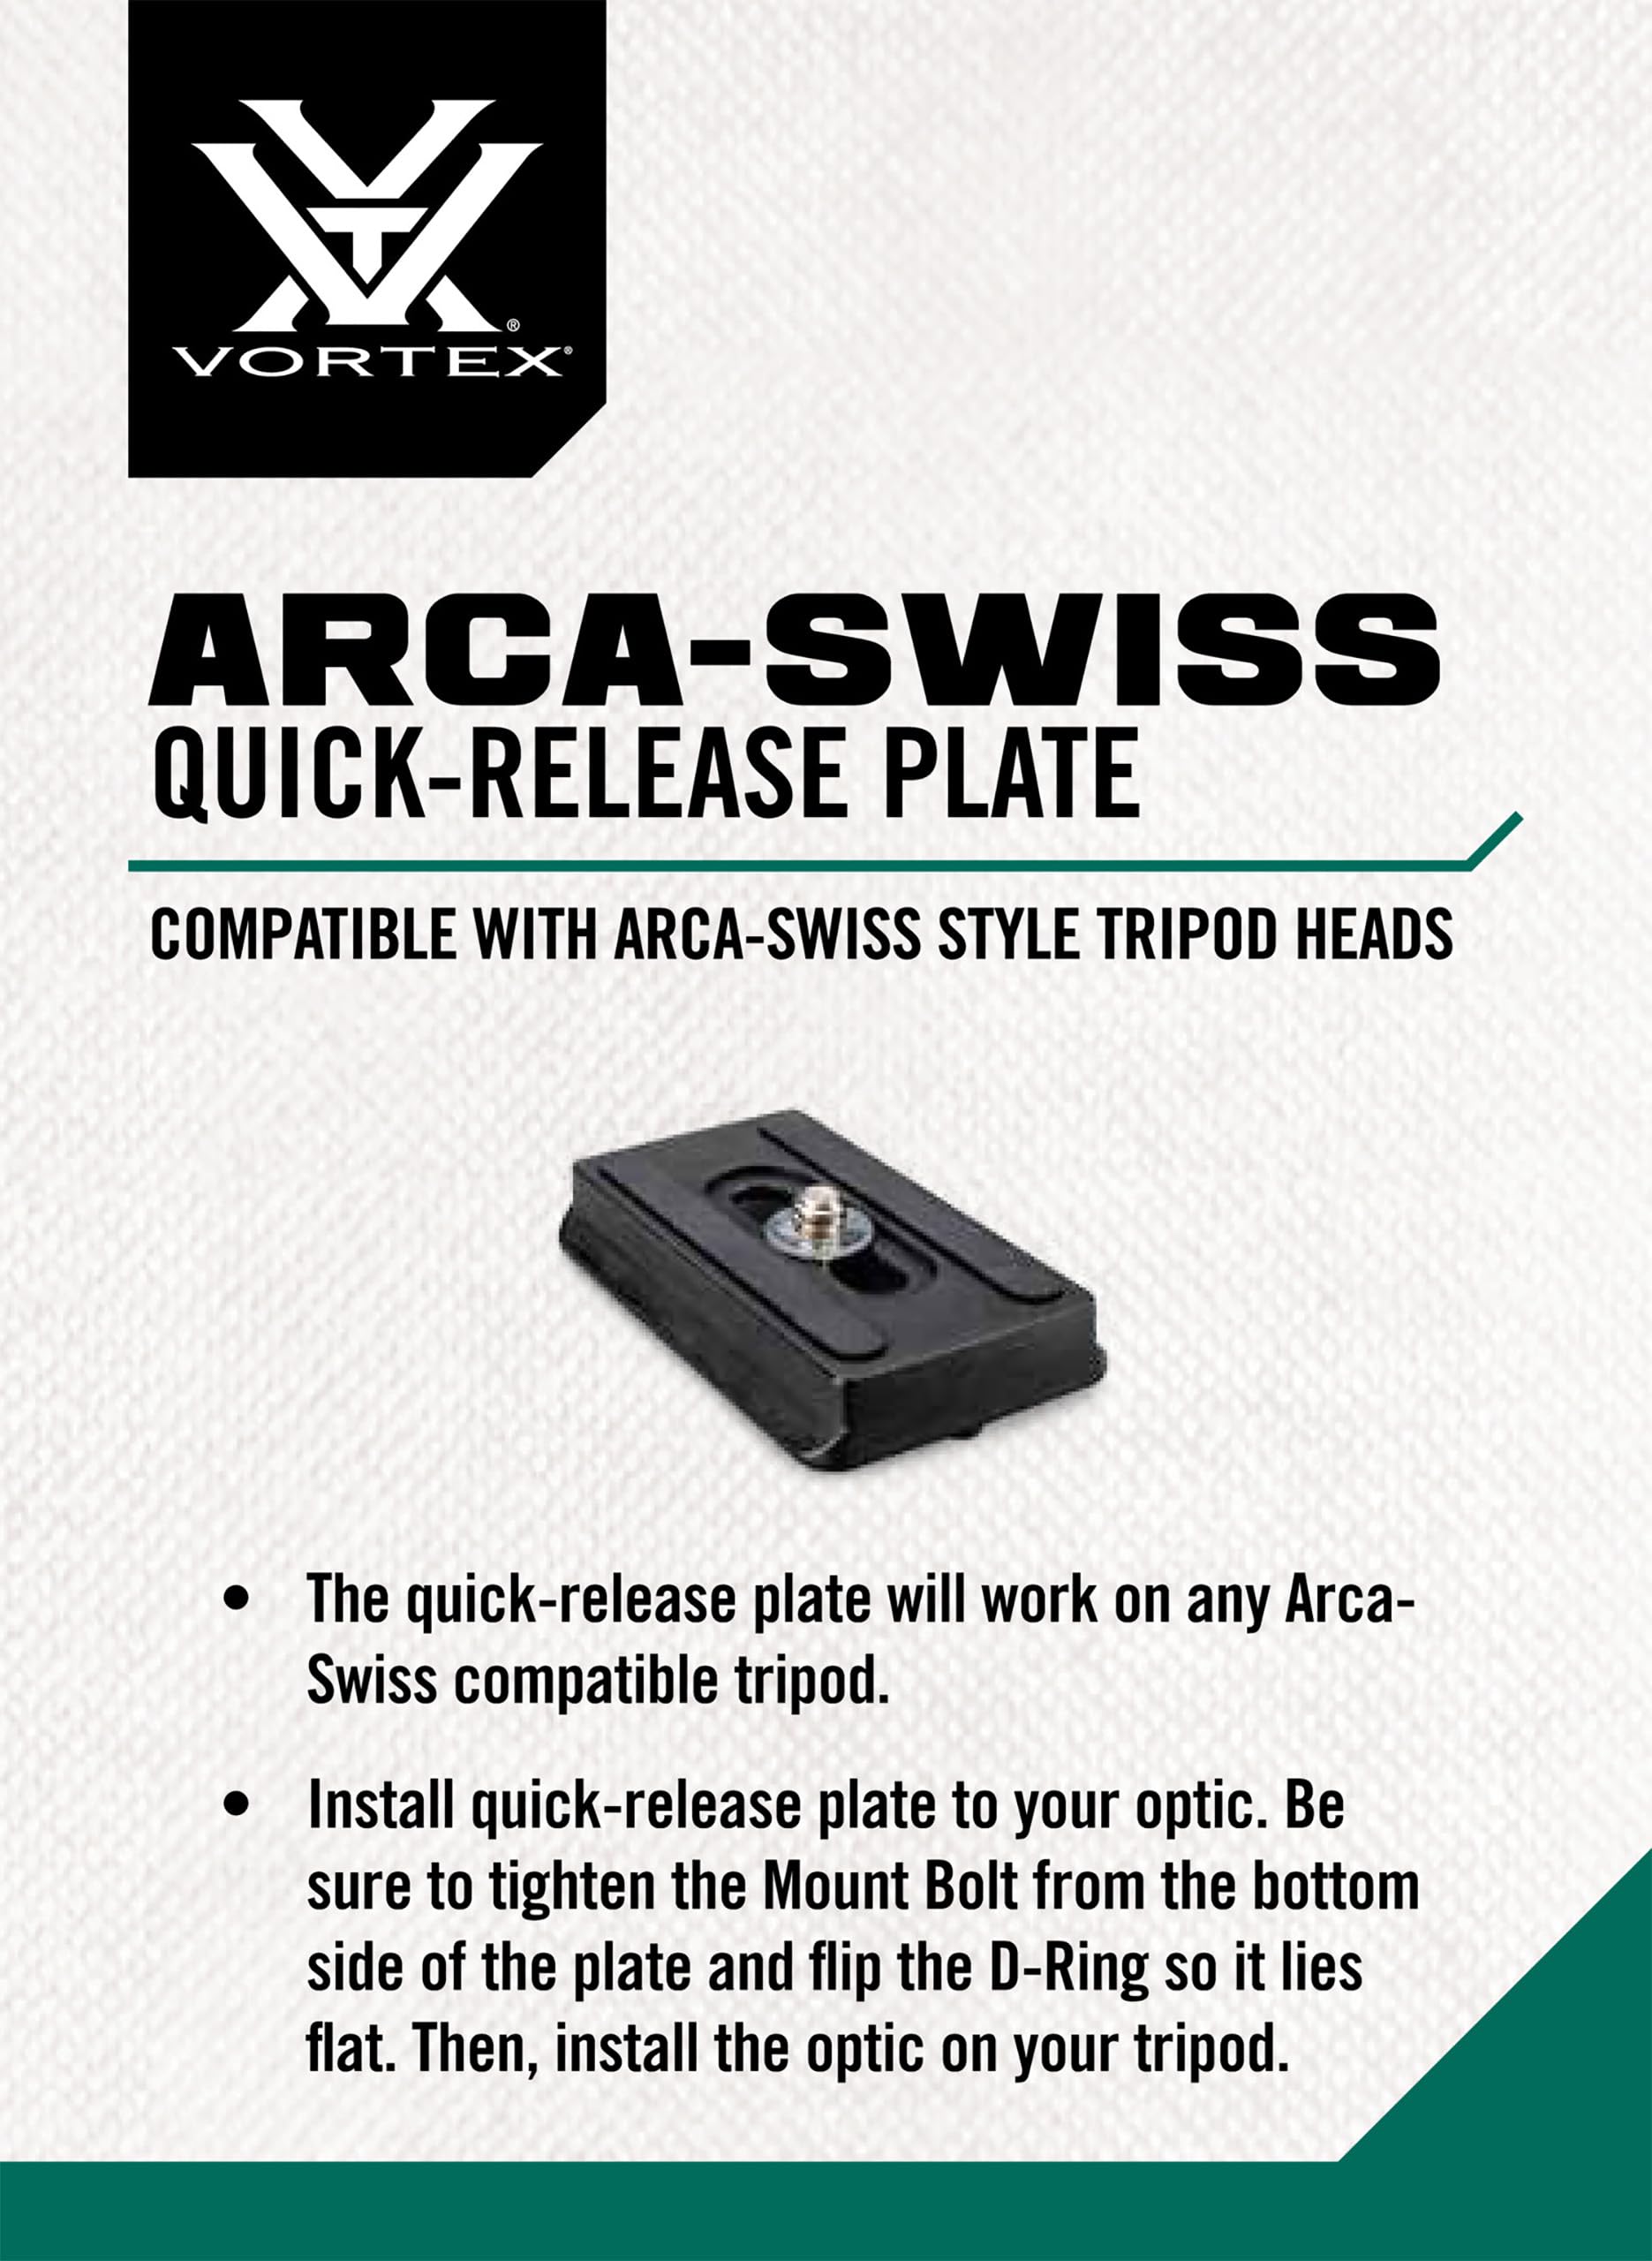 Vortex Optics Arca-Swiss Quick Release Plate